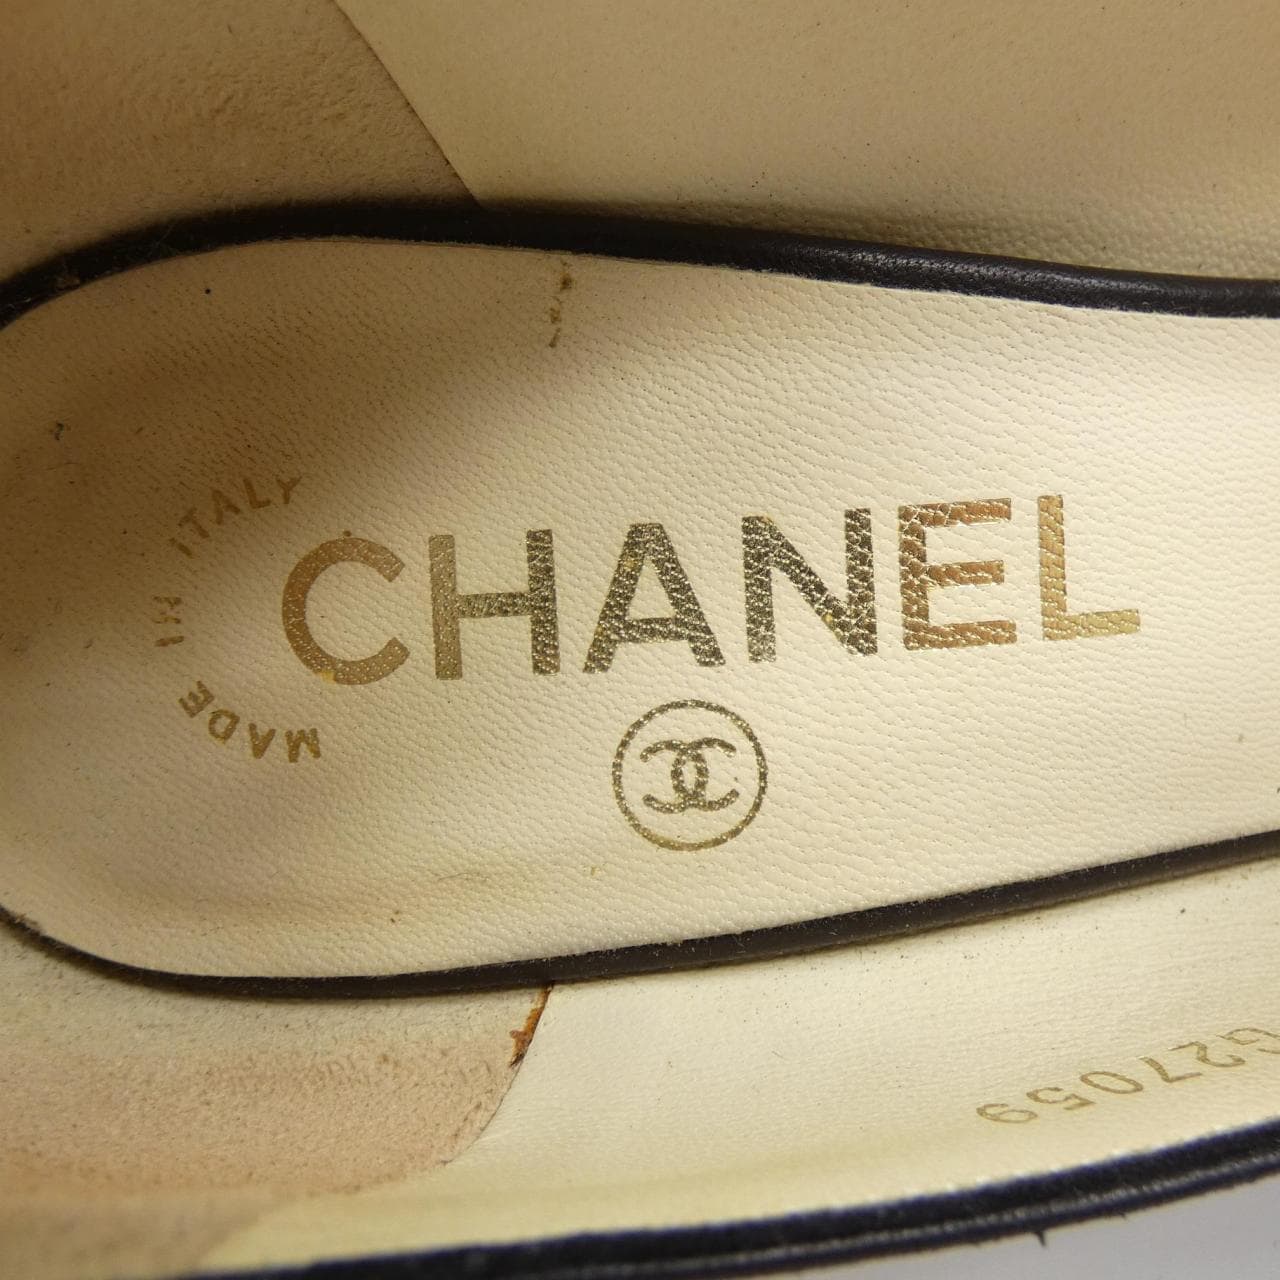 CHANEL香奈儿高跟鞋。